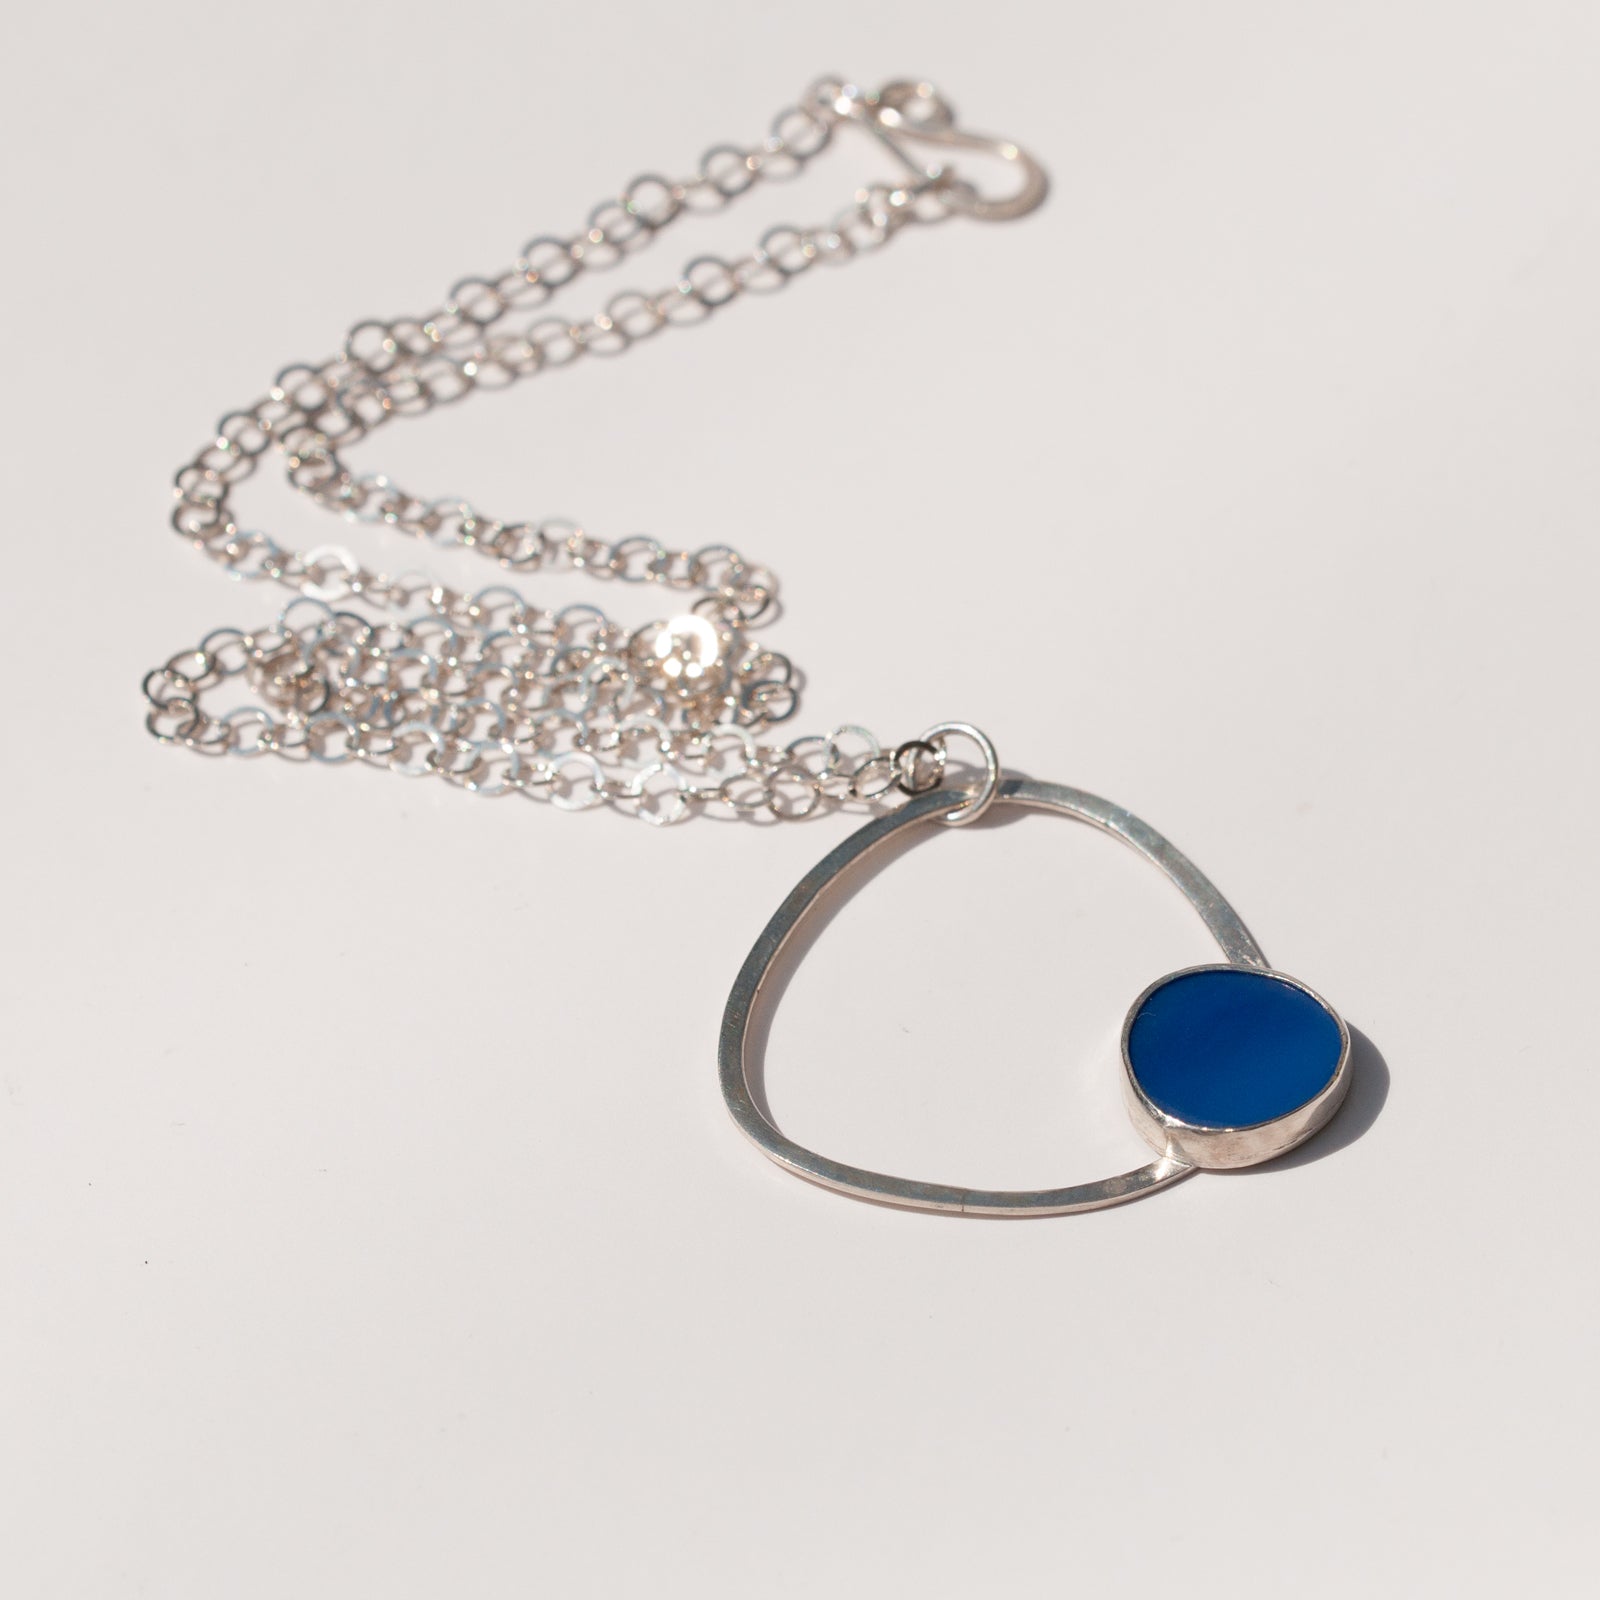 Single Pebble Necklace - Pendant Style